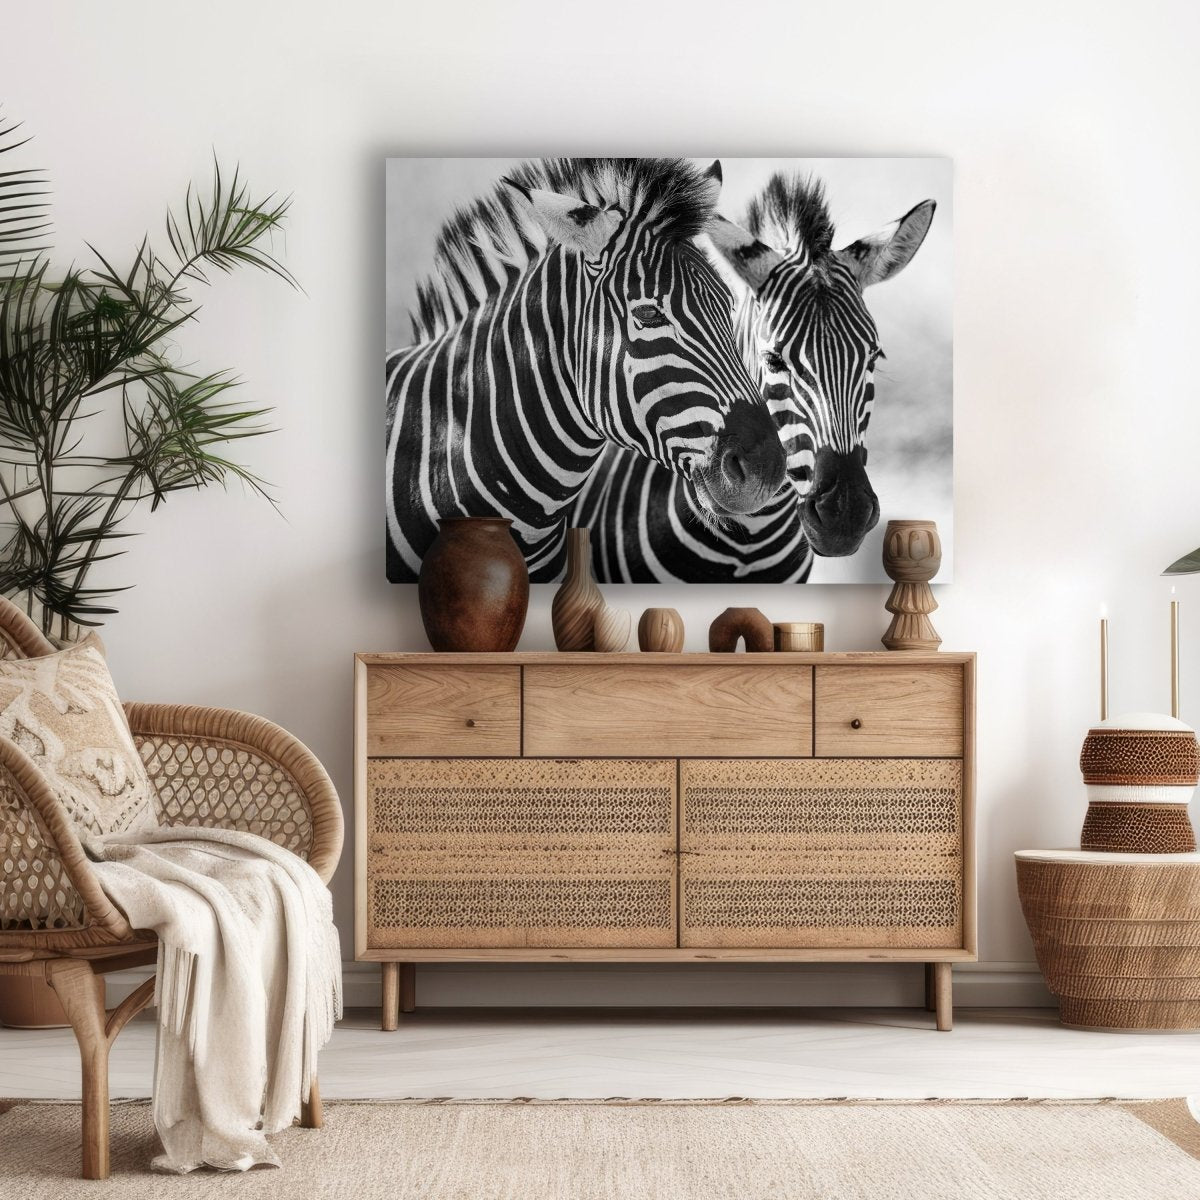 Leinwandbild Schwarz-Weiß, Zebra M0553 kaufen - Bild 2